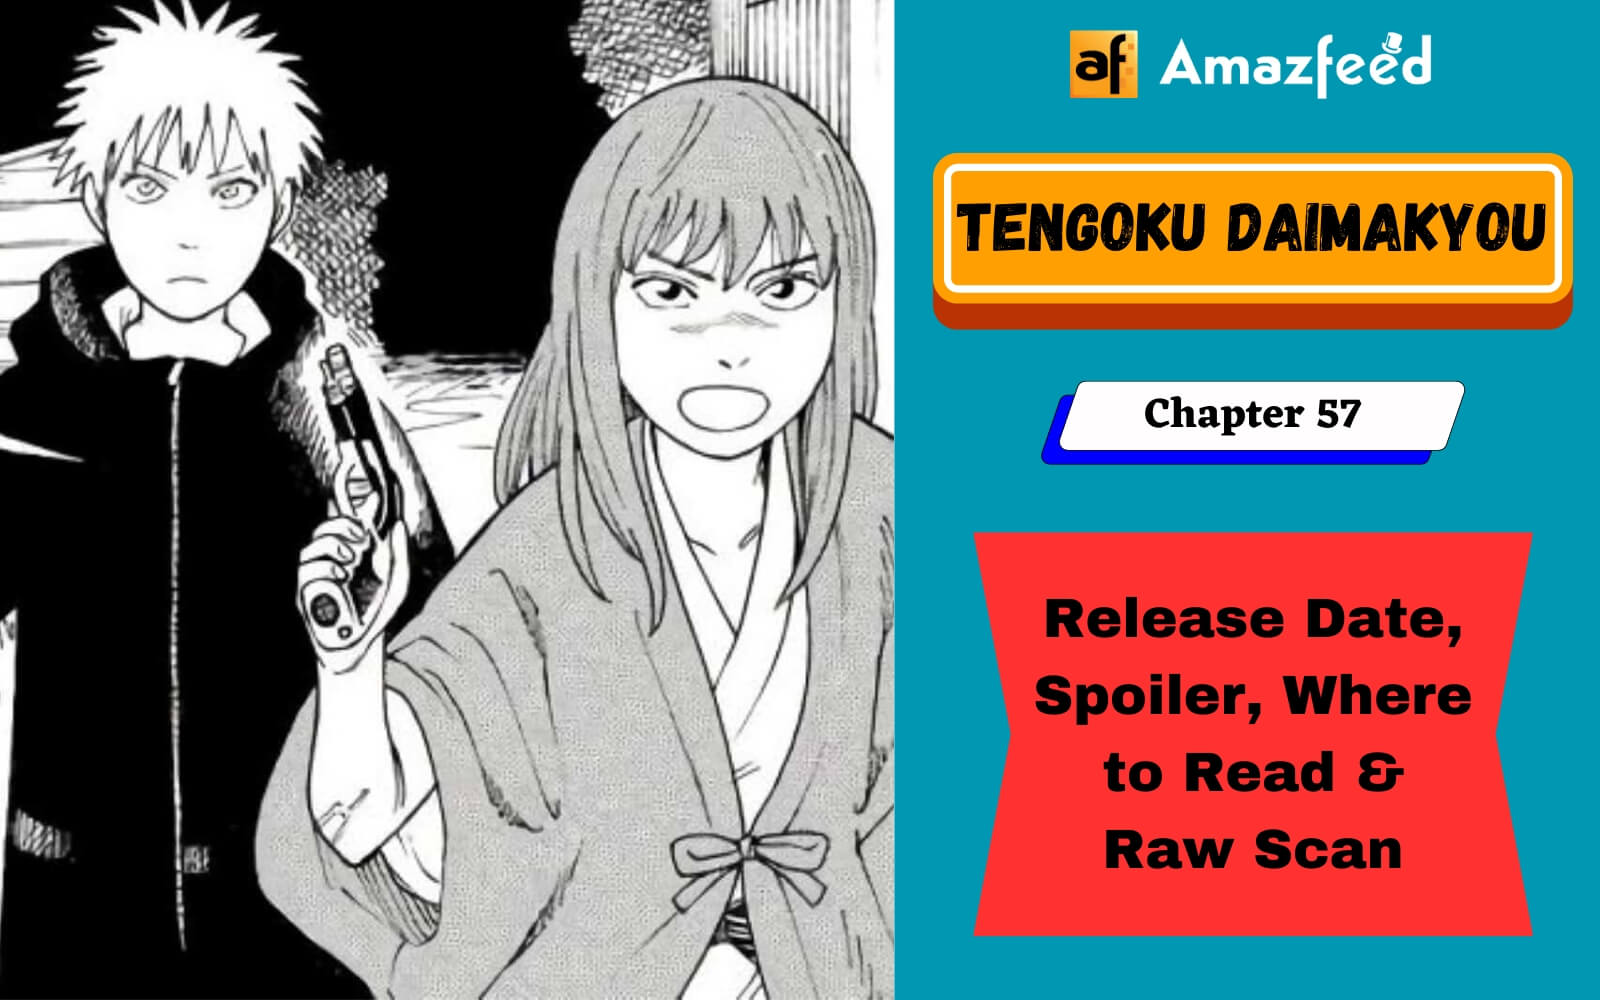 Tengoku Daimakyou Chapter 57 Release Date, Spoiler, Manga, And More - News